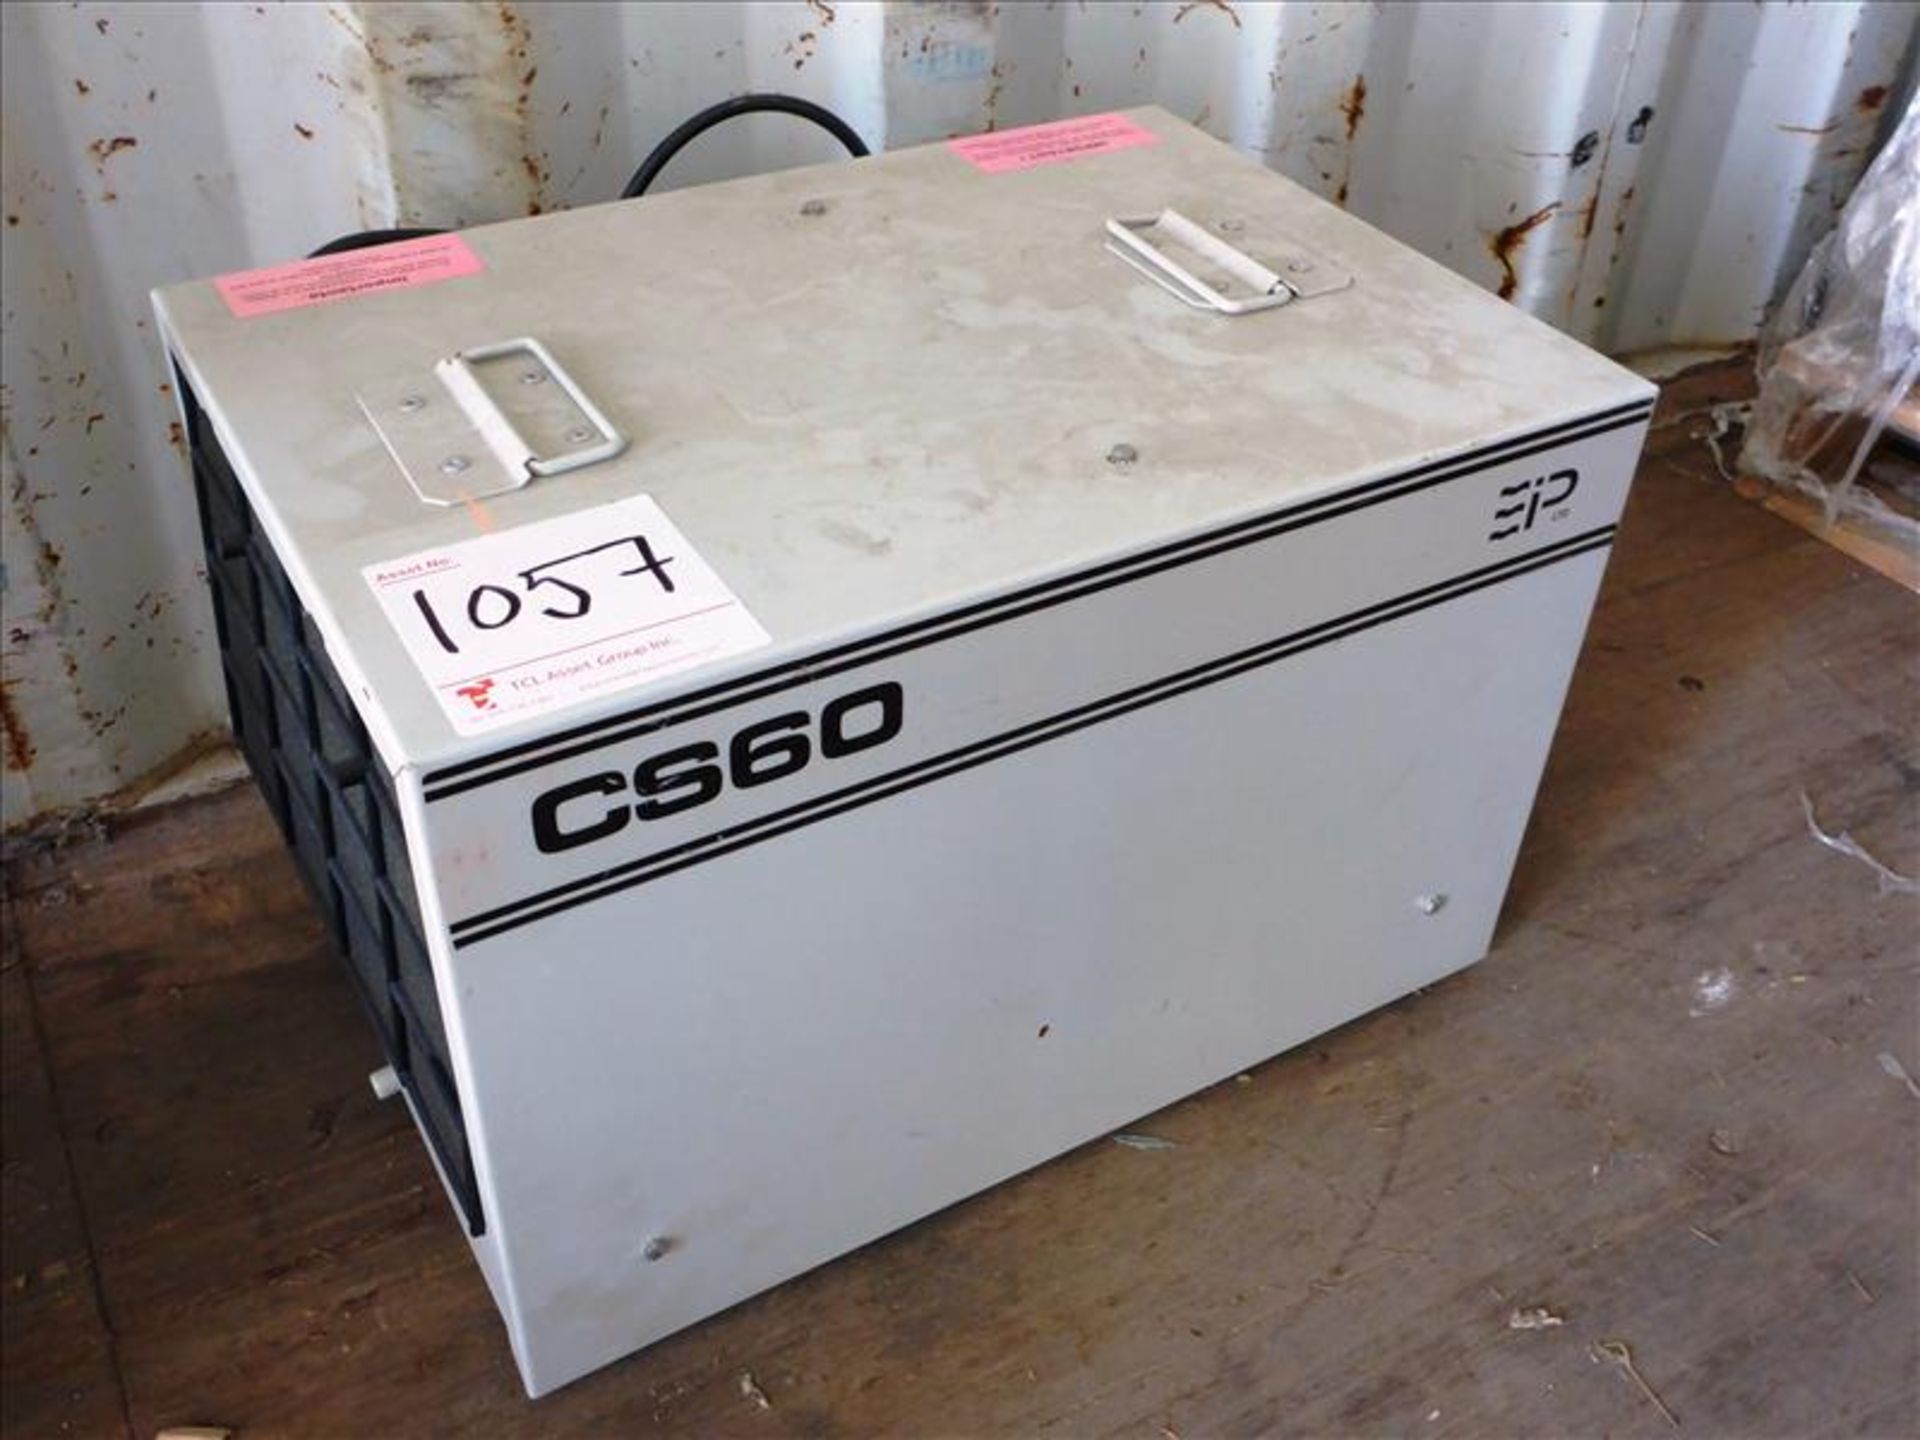 EIP model CS60 industrial dehumidifier (Tag No. 1057)